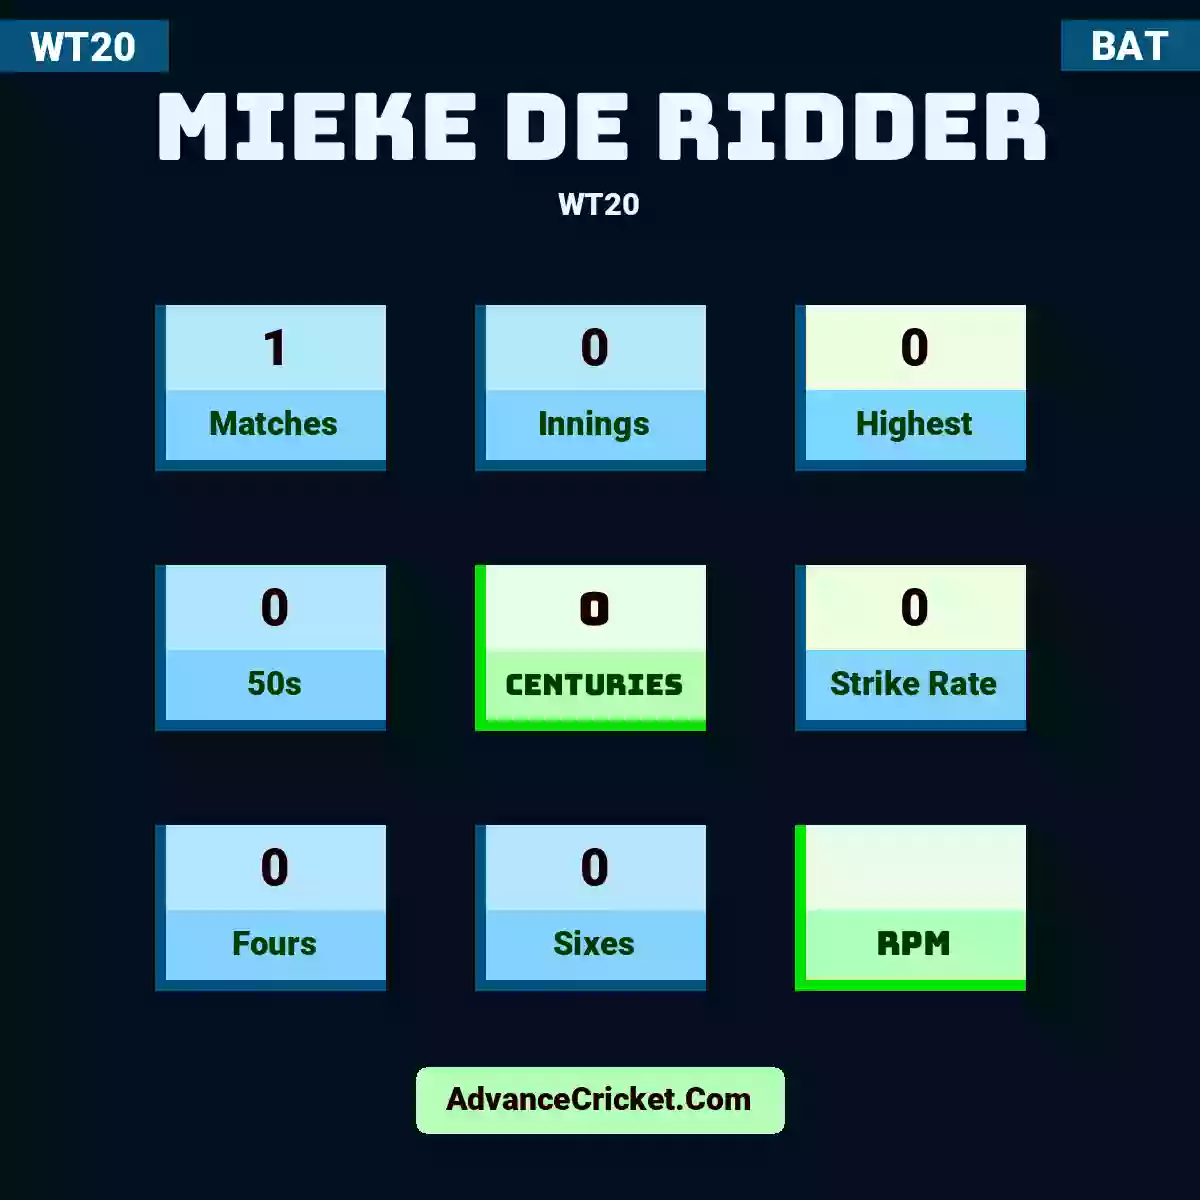 Mieke de Ridder WT20 , Mieke de Ridder played 1 matches, scored 0 runs as highest, 0 half-centuries, and 0 centuries, with a strike rate of 0. M.de.Ridder hit 0 fours and 0 sixes.